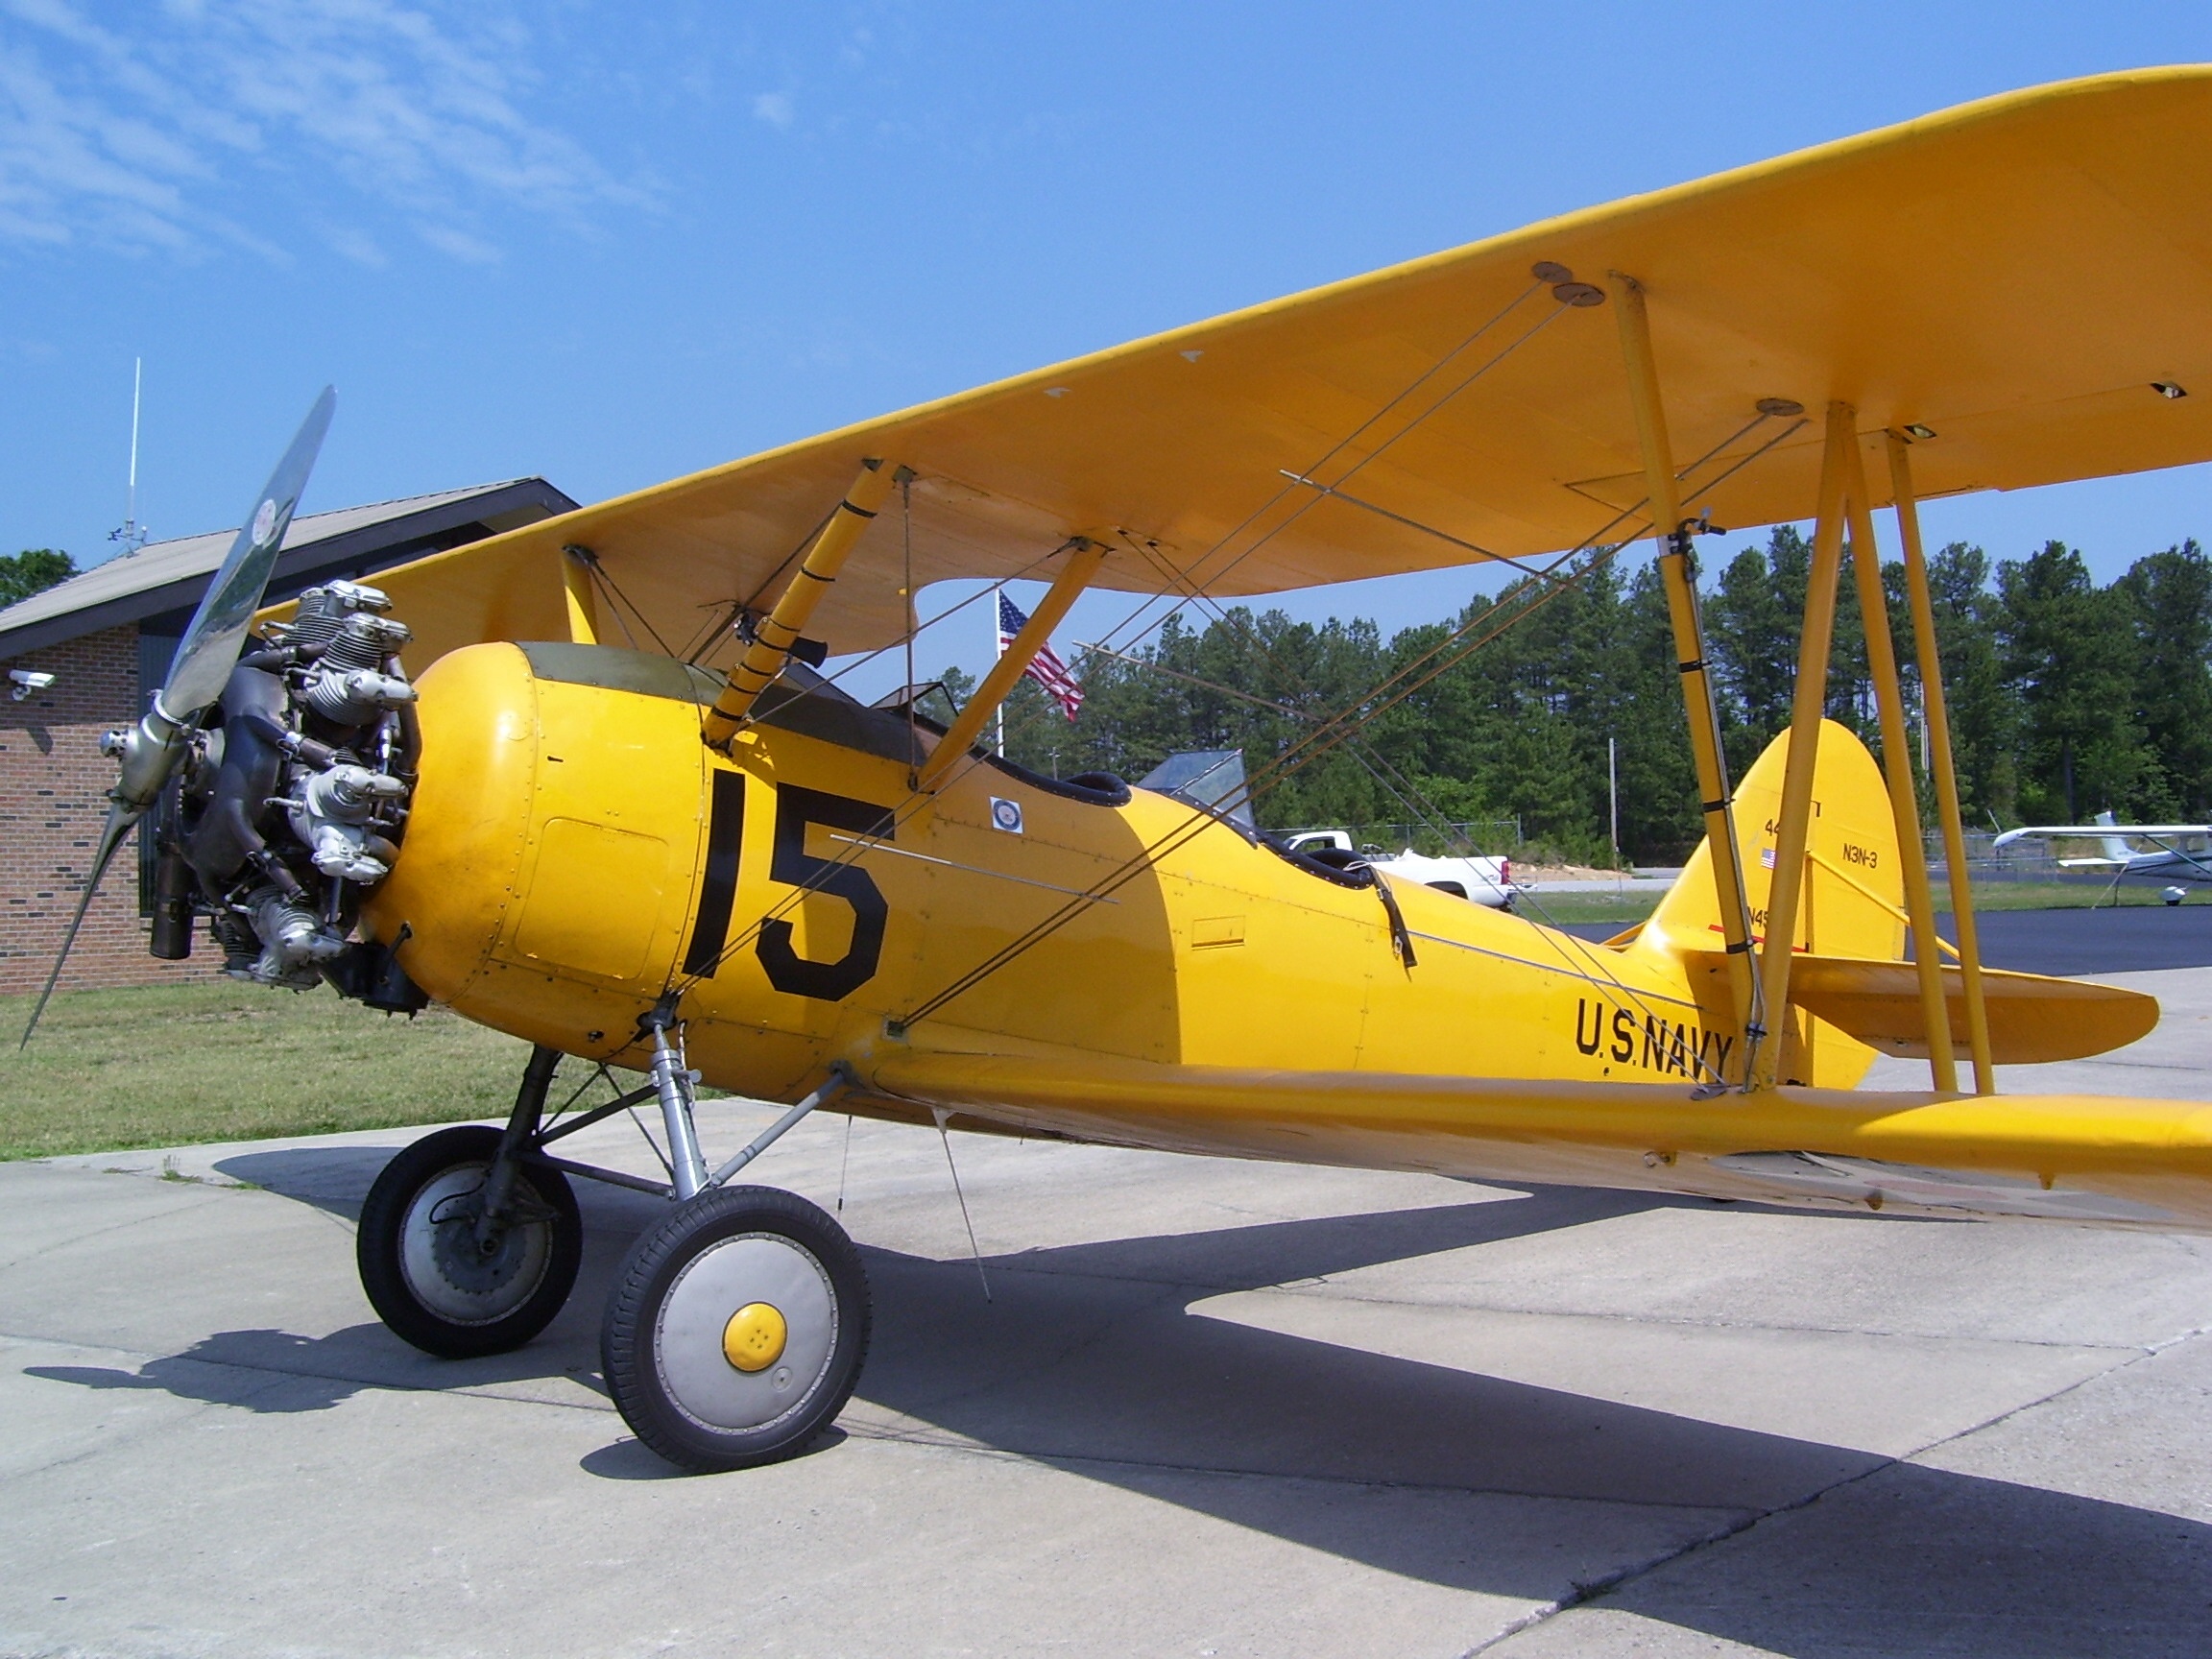 File:N3N-3 biplane at Humphreys County Airport.jpg - Wikimedia Commons